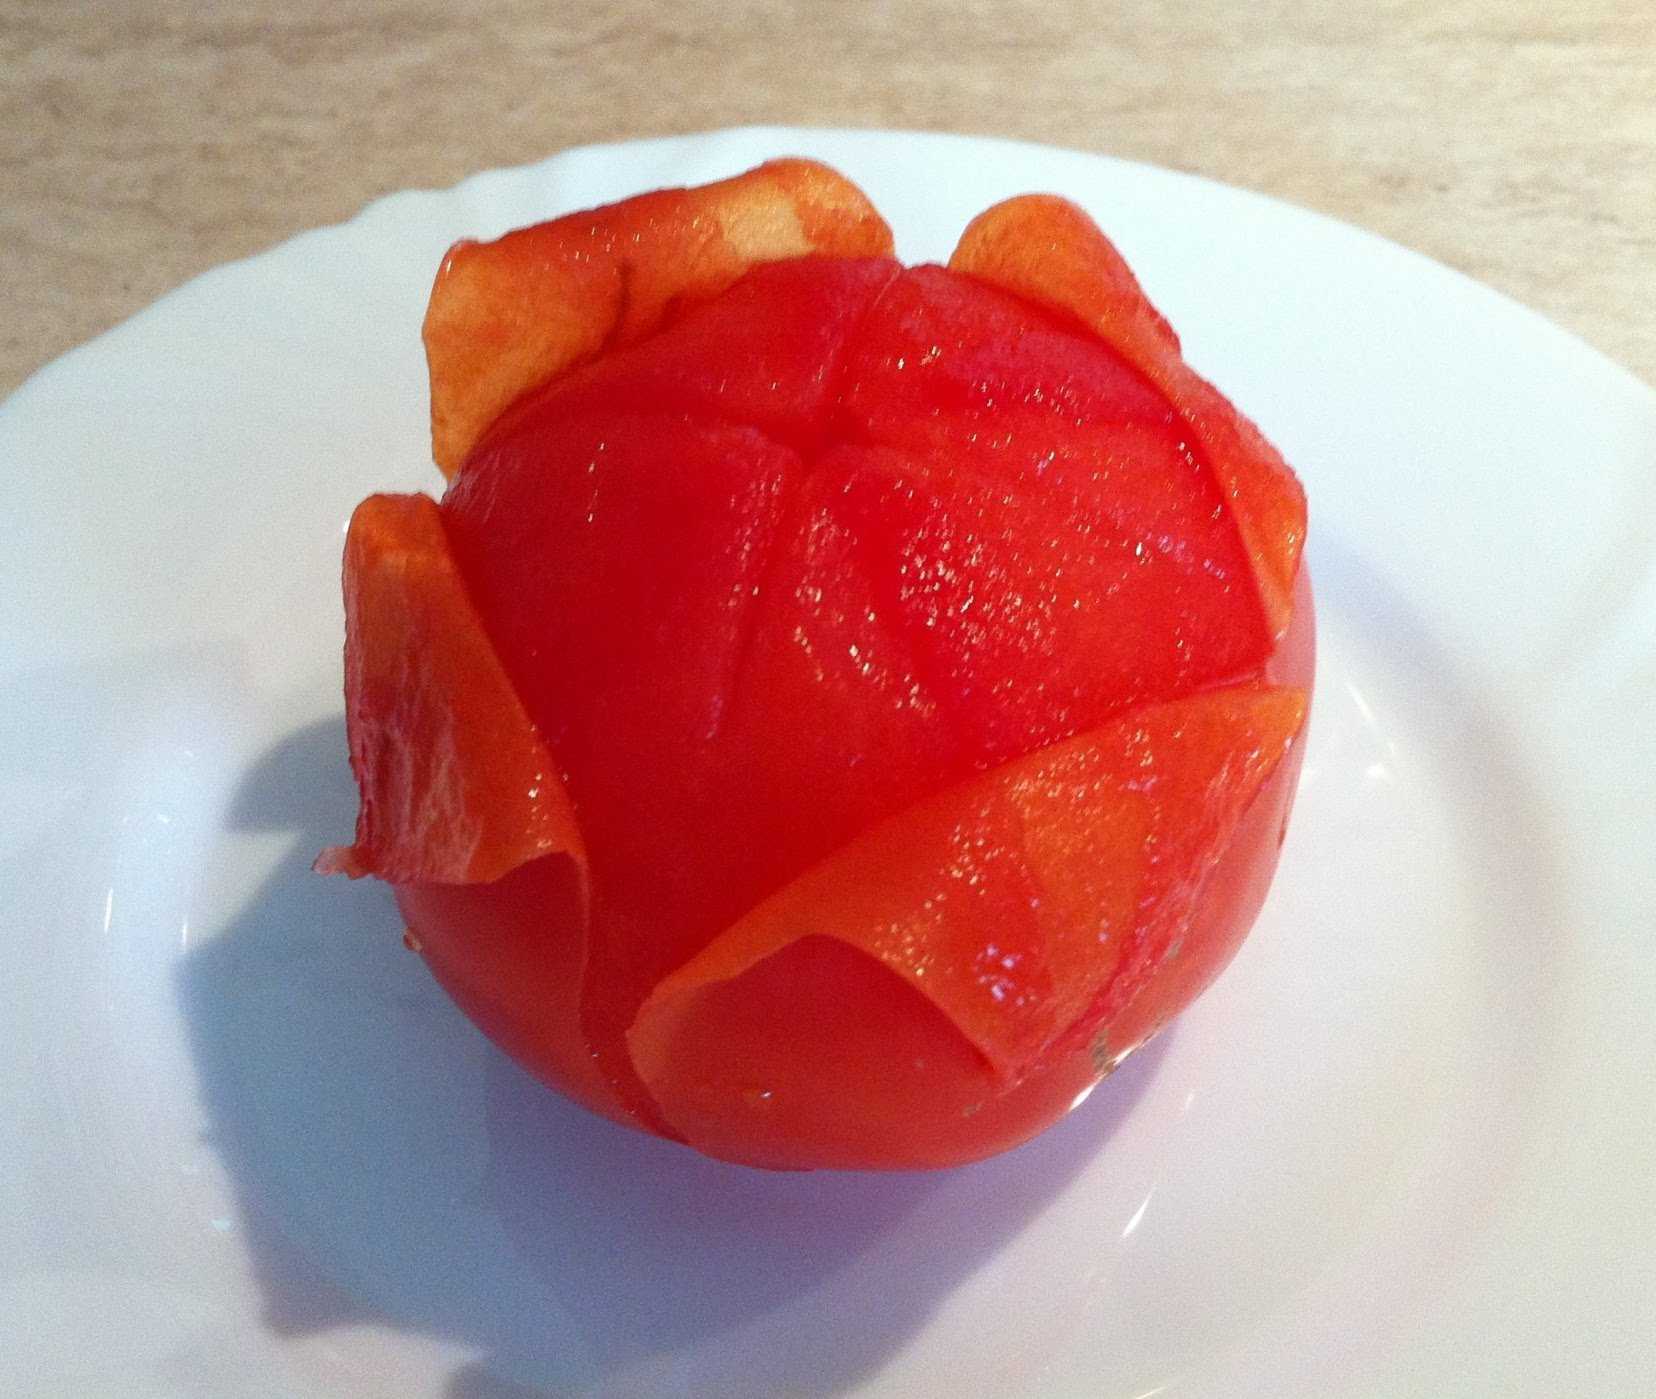 Лайфхак: как снять шкурку с помидора